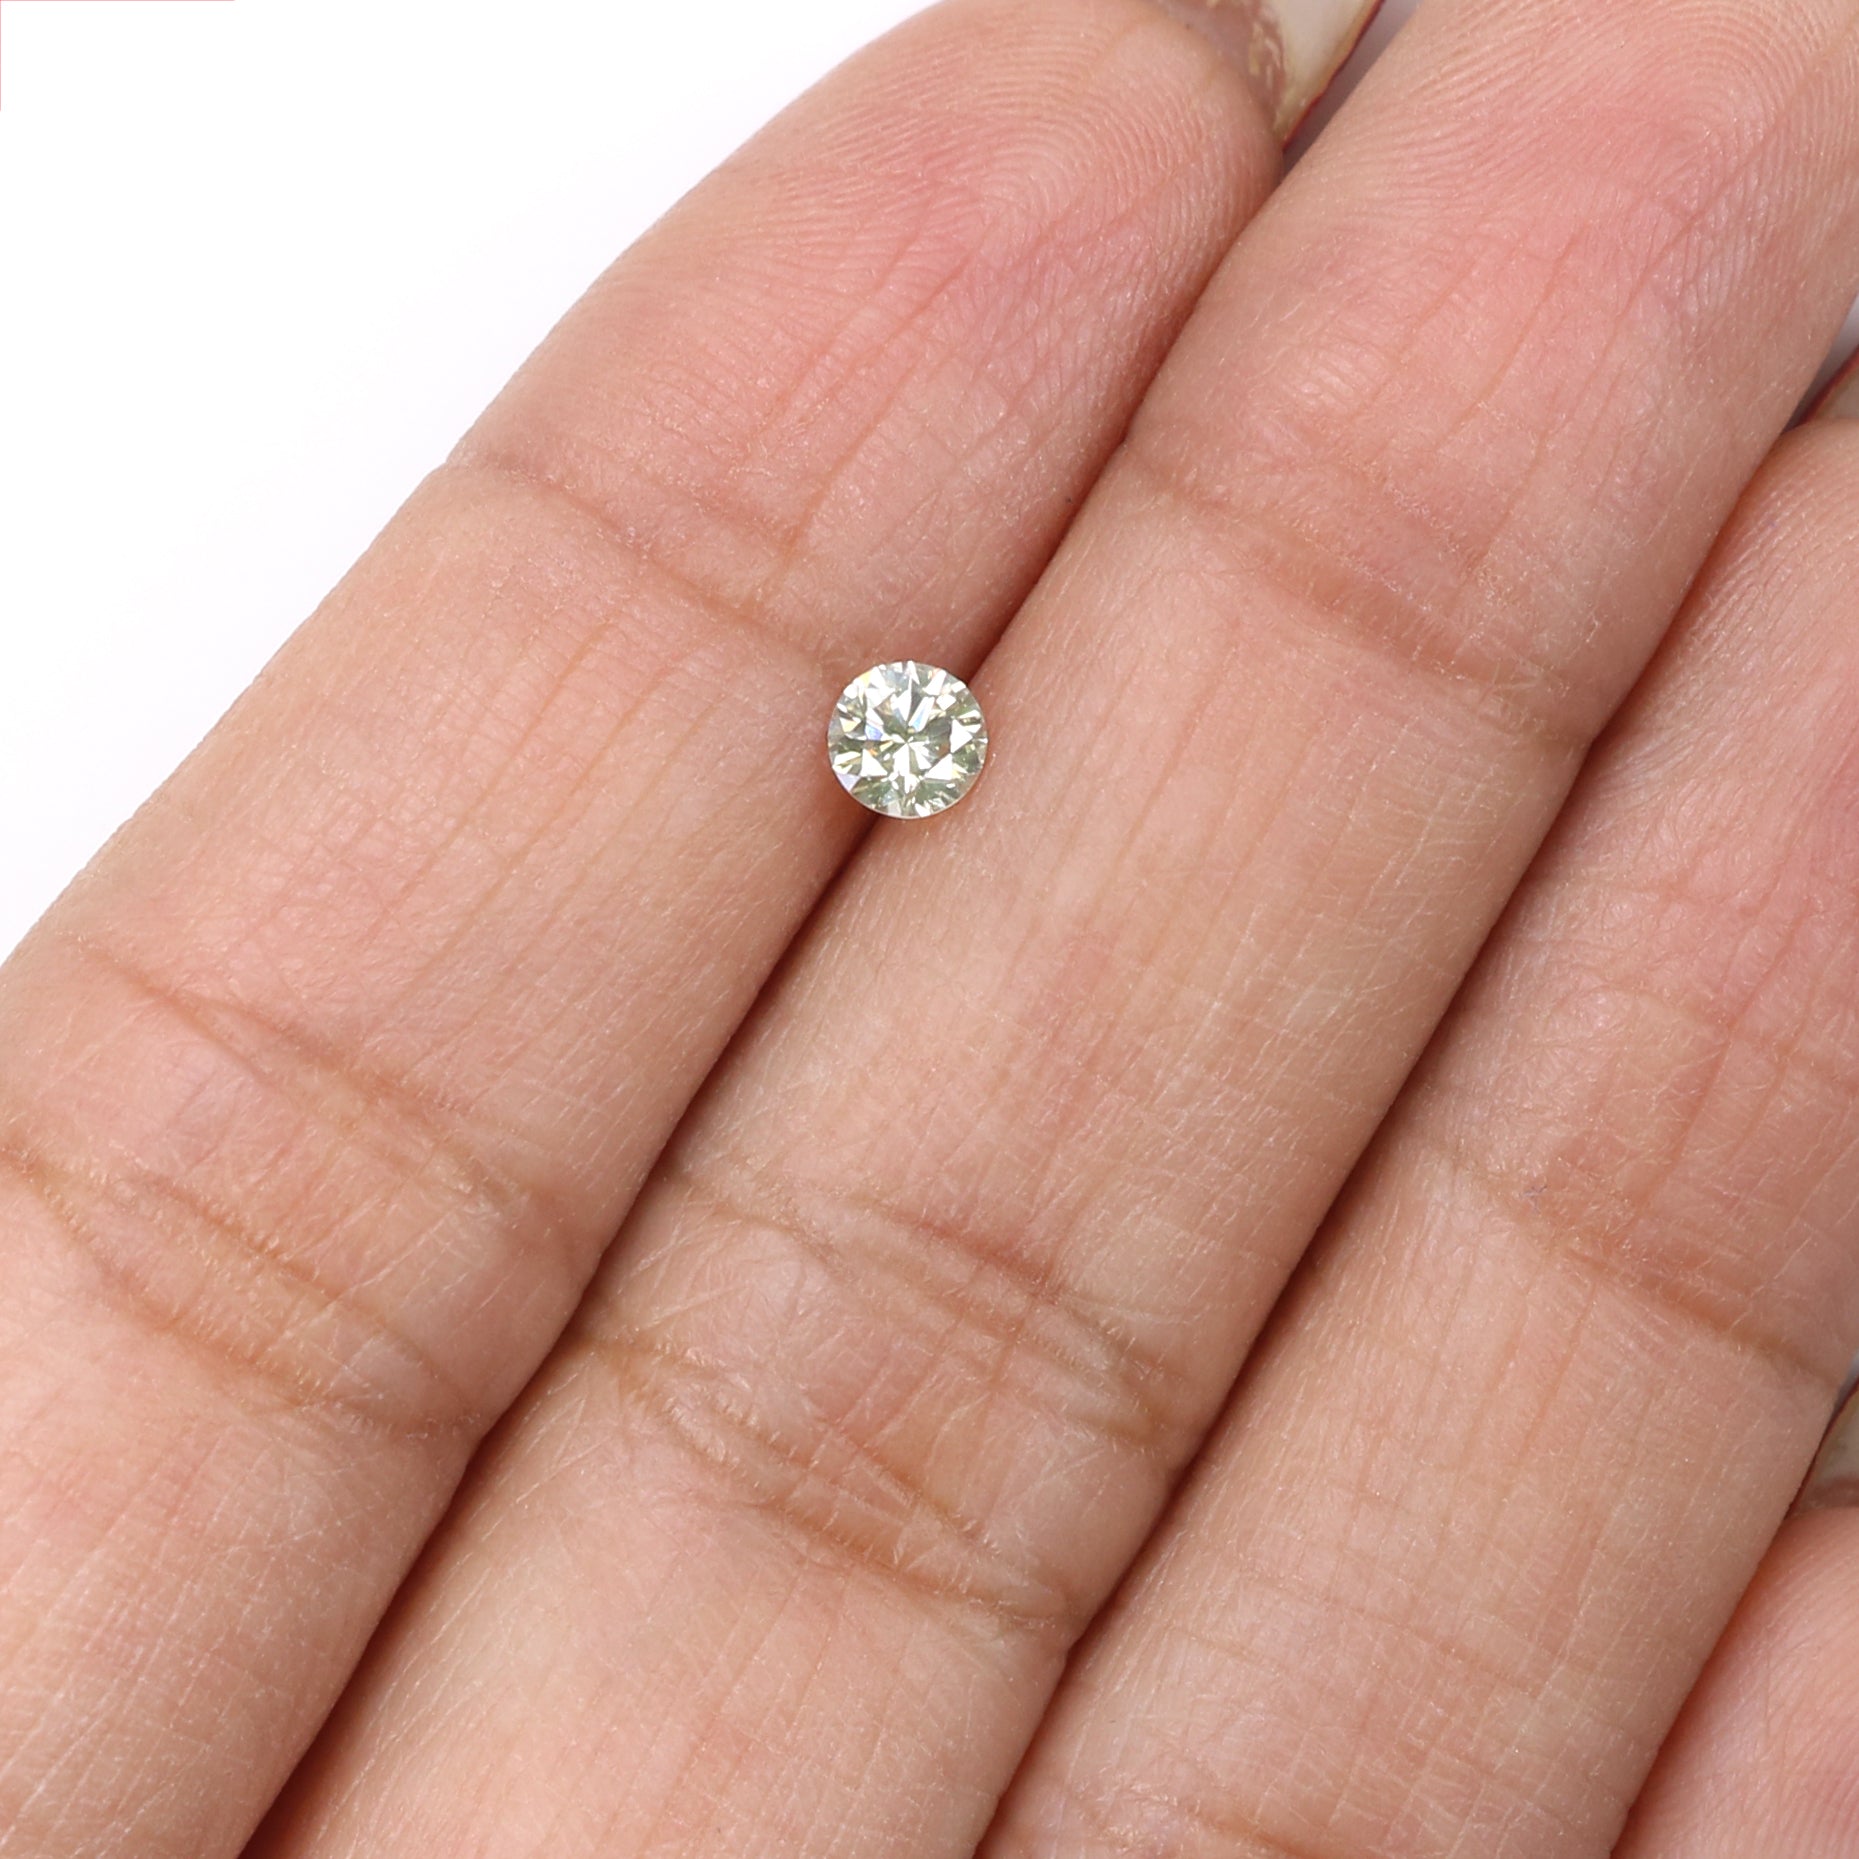 Natural Loose Round Brilliant Cut Diamond White - J Color 0.23 CT 3.85 MM Round Shape Brilliant Cut Diamond L2064